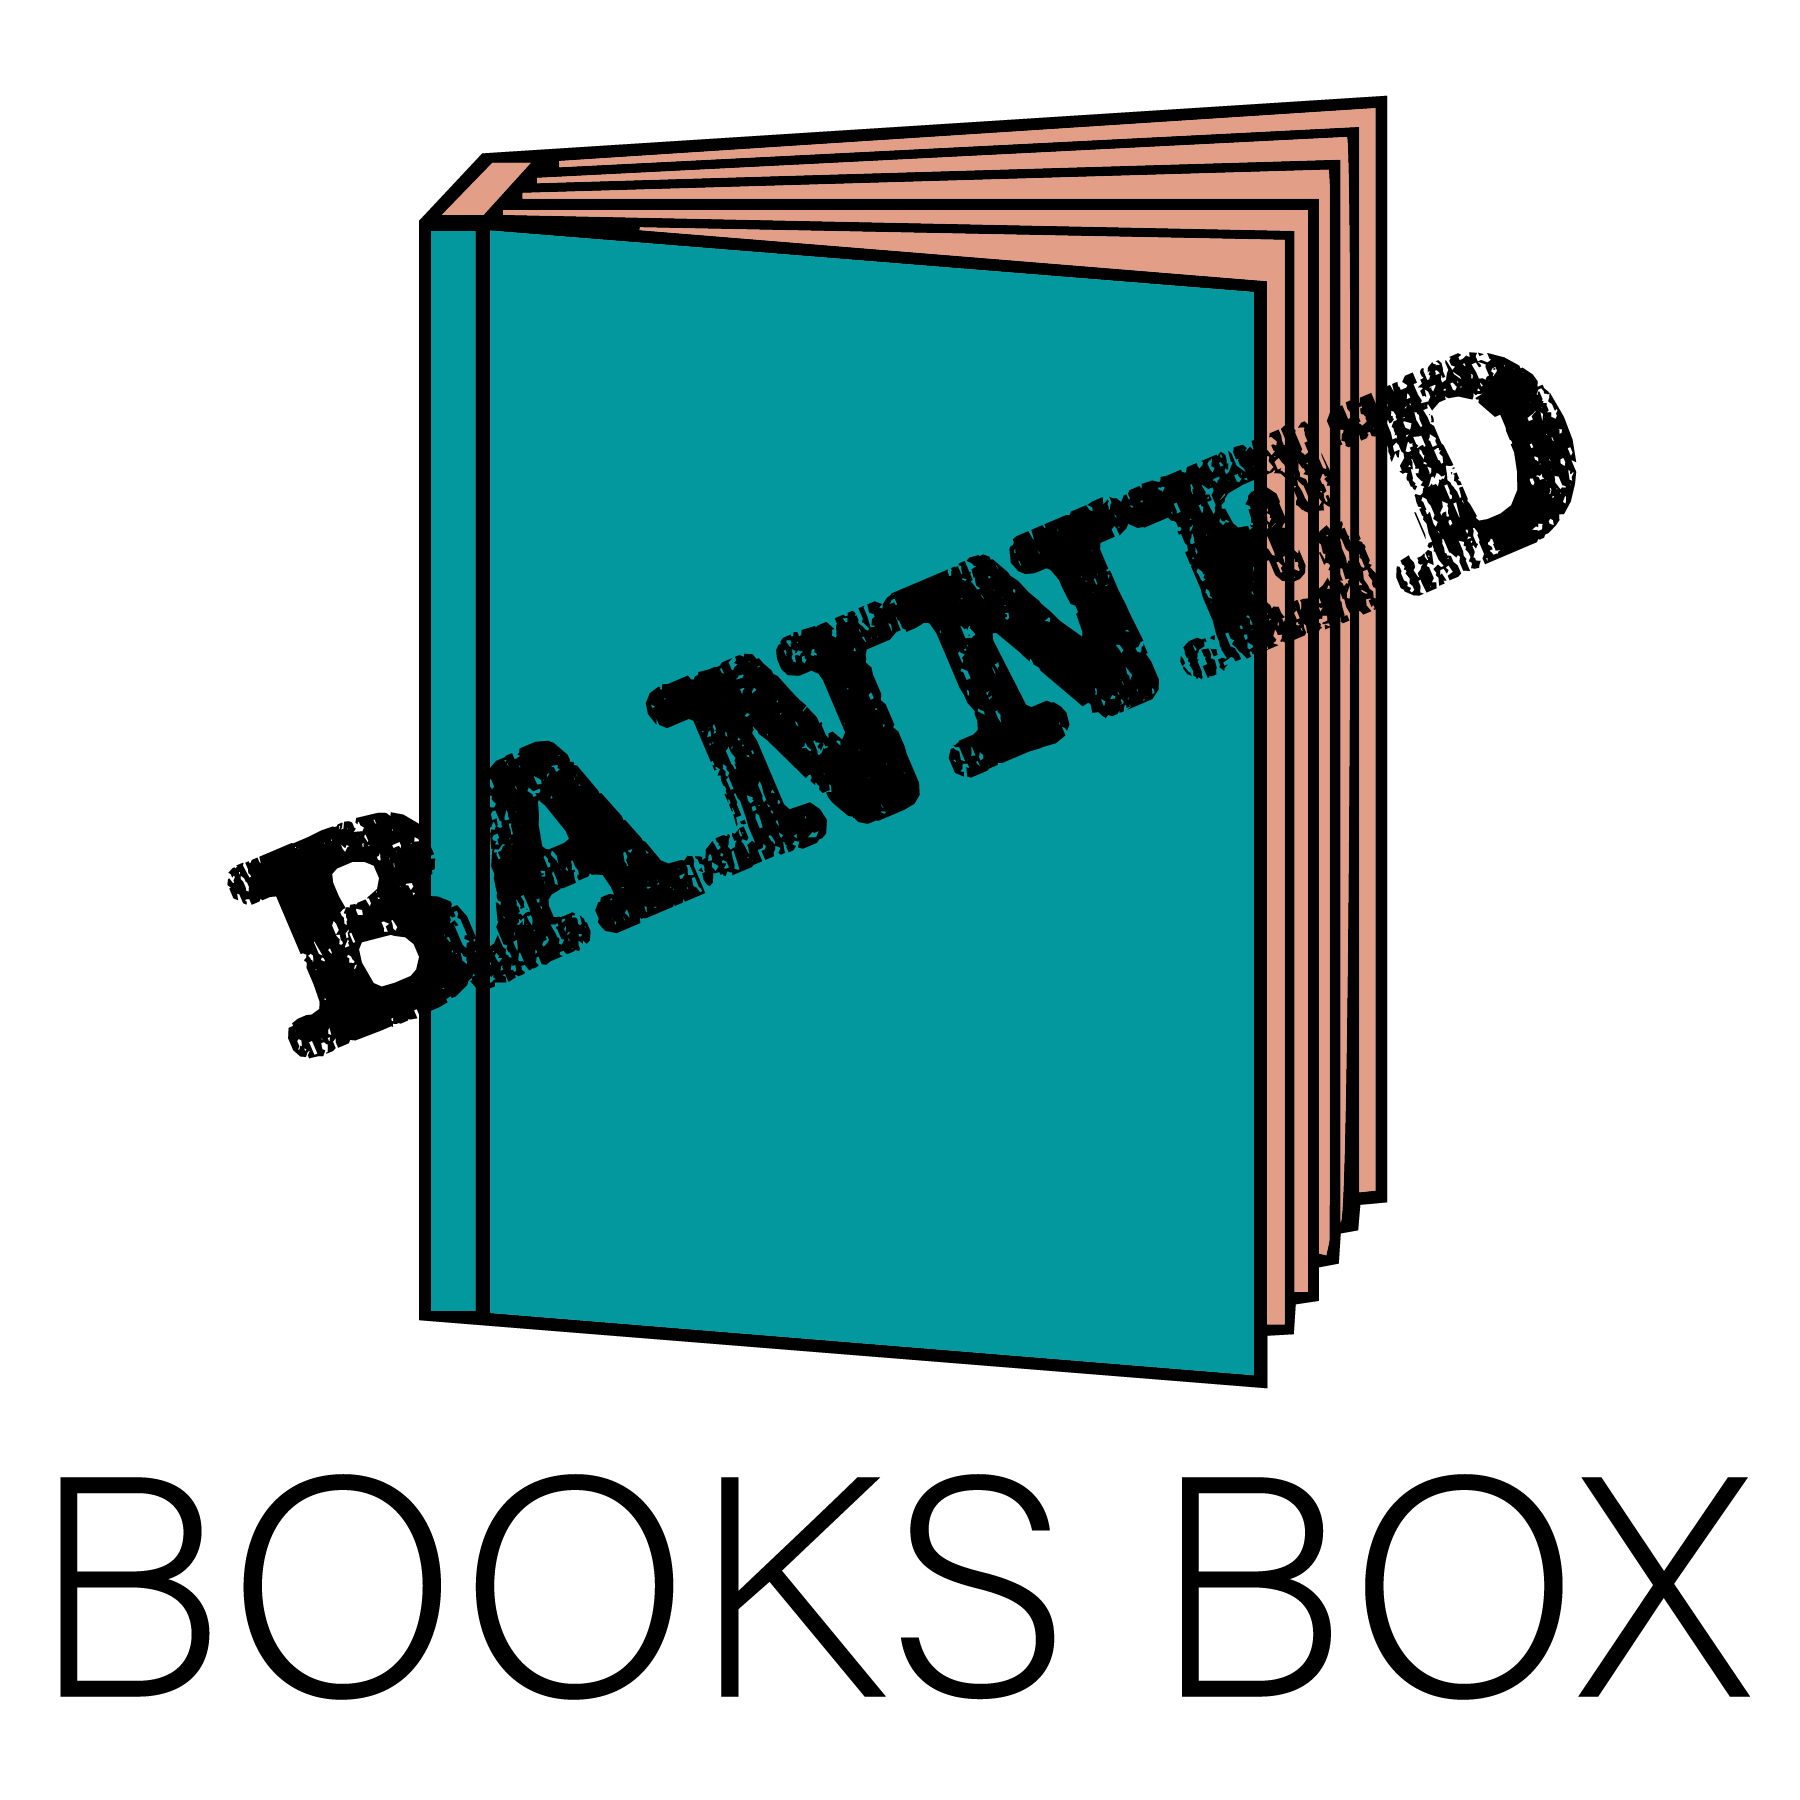 190-banned-books-box-logo-final-03-copy.jpg